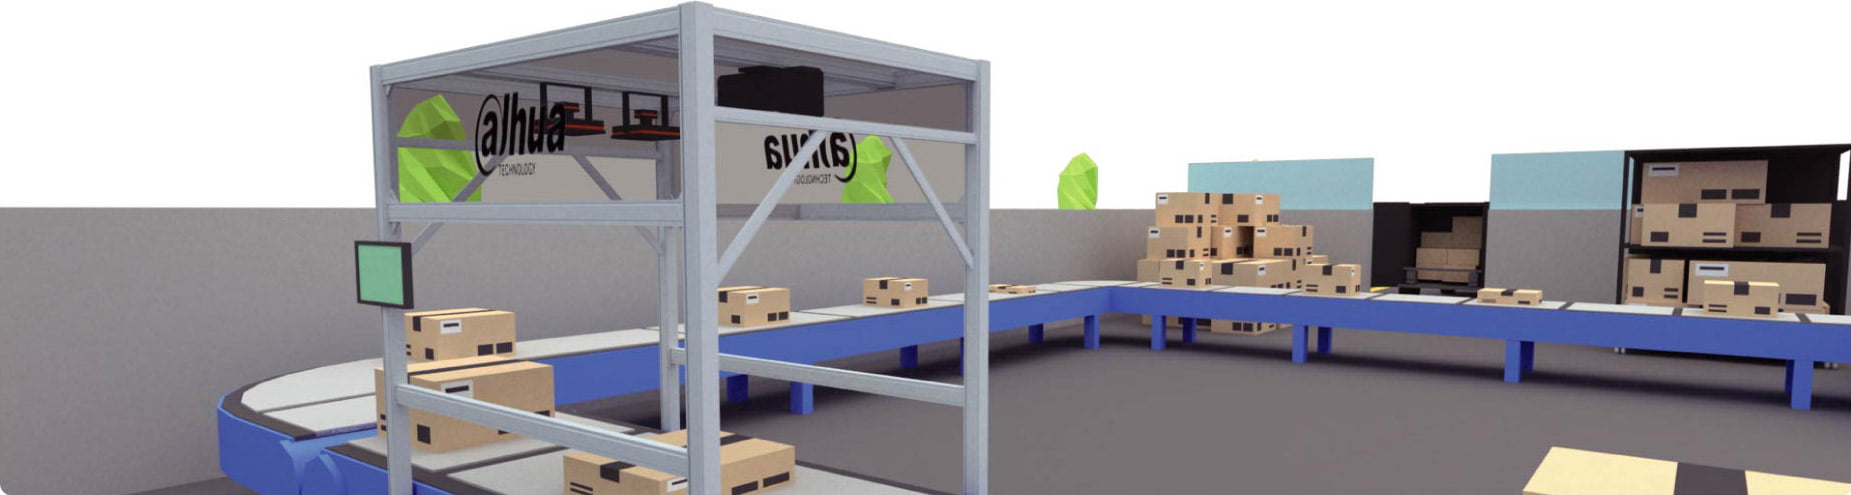 Out Bound Area - warehousing center - Smart Express Logistics Solution - Collsam